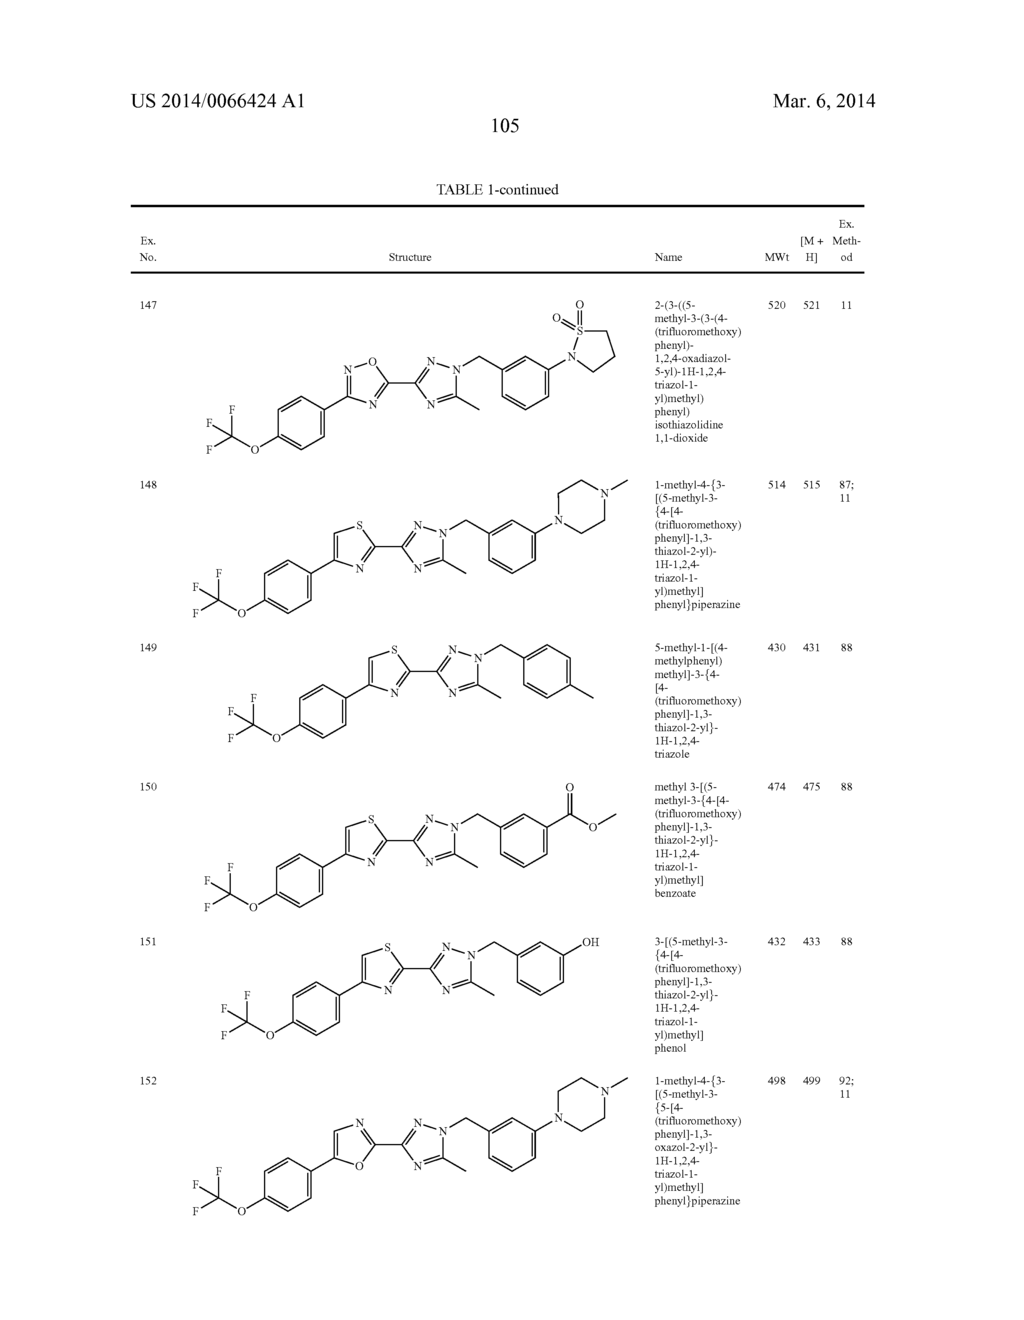 HETEROCYCLIC MODULATORS OF HIF ACTIVITY FOR TREATMENT OF DISEASE - diagram, schematic, and image 117